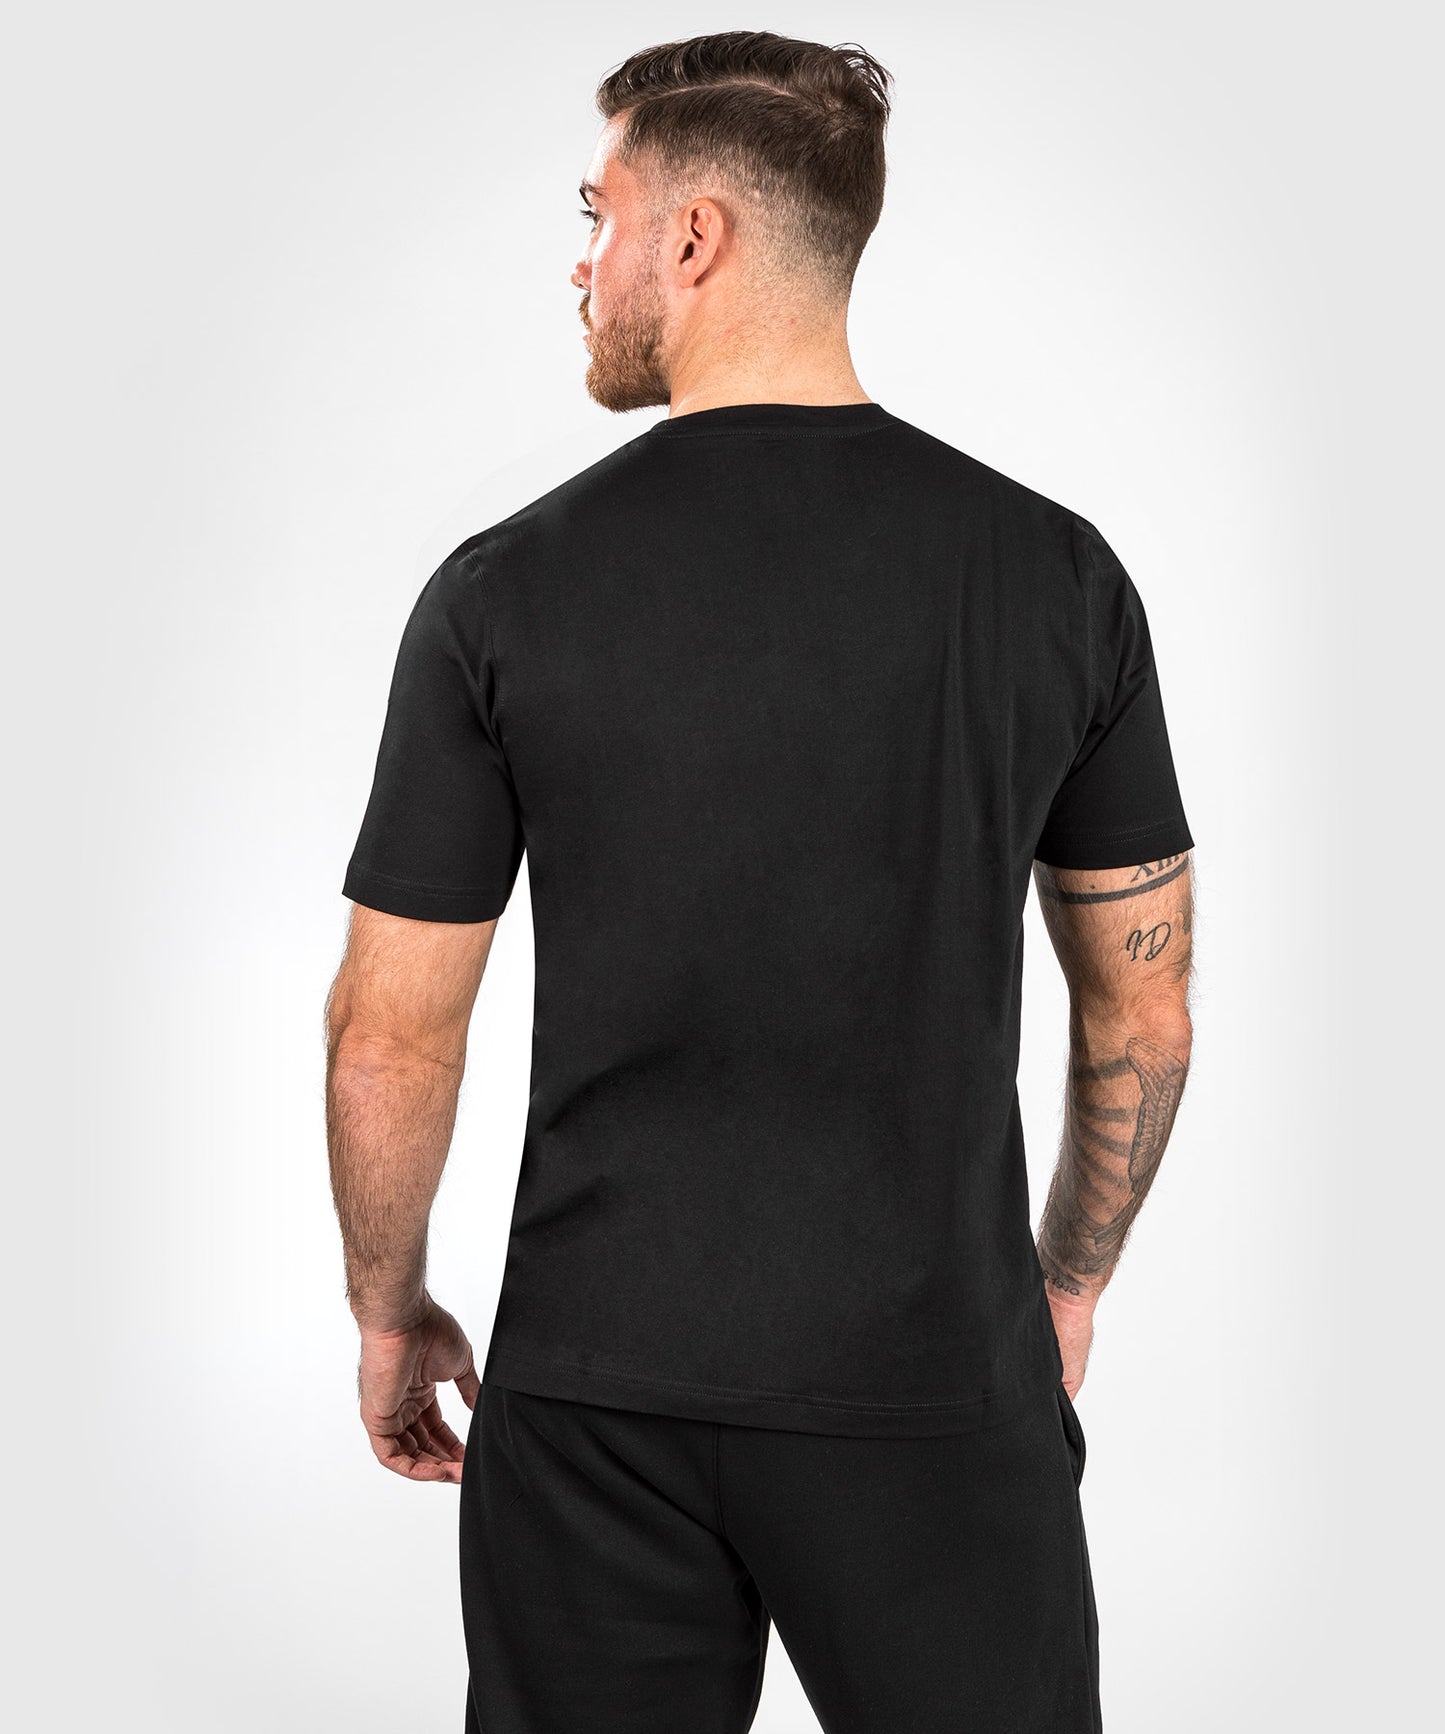 UFC Adrenaline by Venum Replica  Men’s Short-sleeve T-shirt - Black